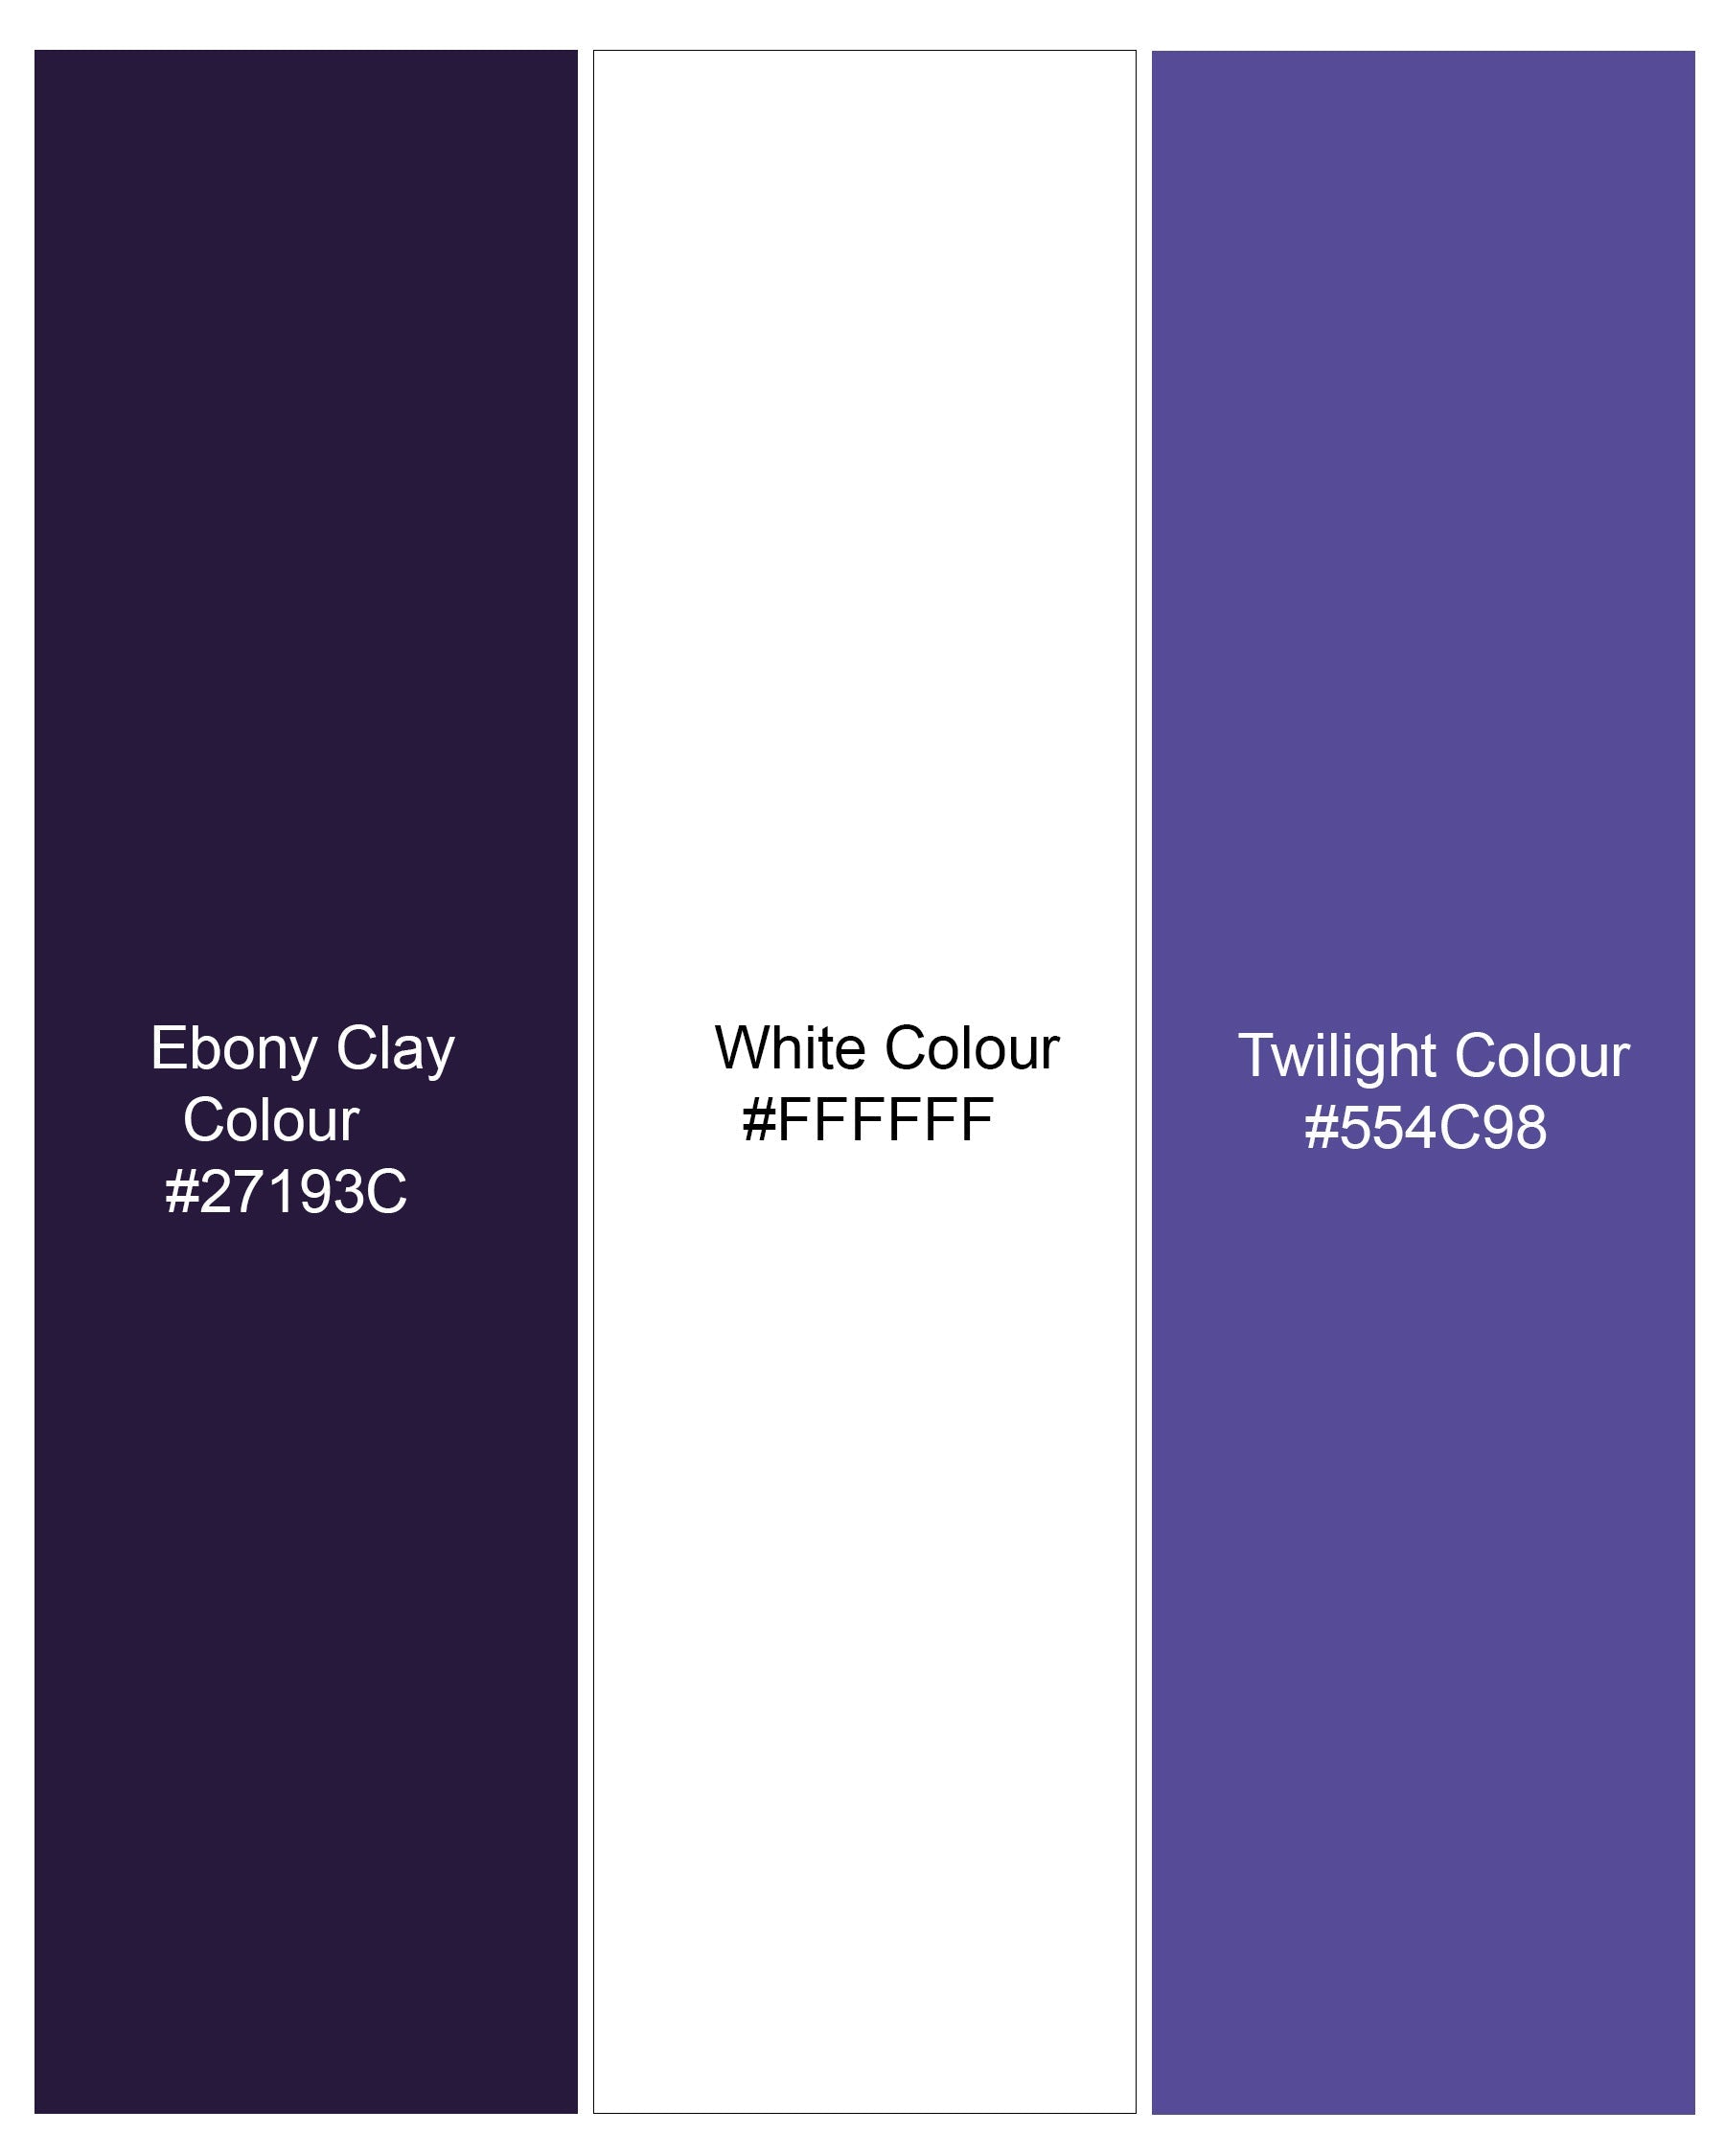 Ebony Clay Navy Blue and Twilight Blue Windowpane Premium Cotton Shirt 8235-BD-BLE-38,8235-BD-BLE-H-38,8235-BD-BLE-39,8235-BD-BLE-H-39,8235-BD-BLE-40,8235-BD-BLE-H-40,8235-BD-BLE-42,8235-BD-BLE-H-42,8235-BD-BLE-44,8235-BD-BLE-H-44,8235-BD-BLE-46,8235-BD-BLE-H-46,8235-BD-BLE-48,8235-BD-BLE-H-48,8235-BD-BLE-50,8235-BD-BLE-H-50,8235-BD-BLE-52,8235-BD-BLE-H-52